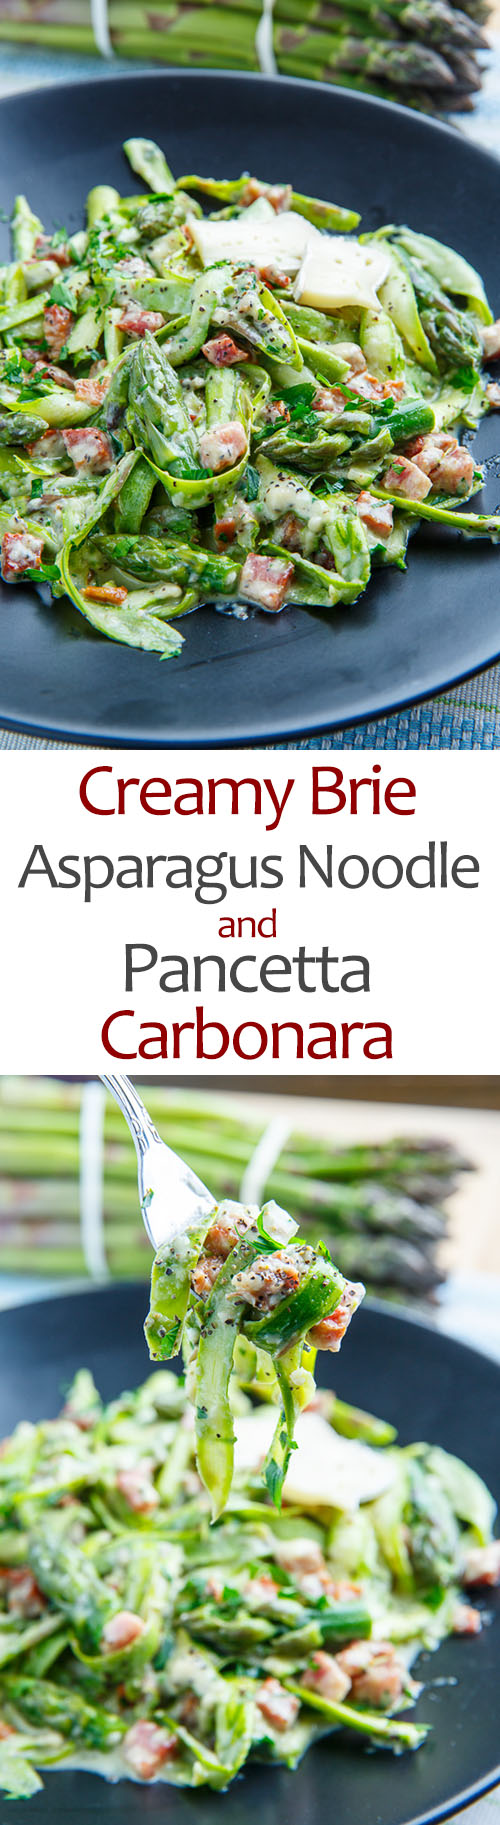 Creamy Brie Asparagus Noodle and Pancetta Carbonara